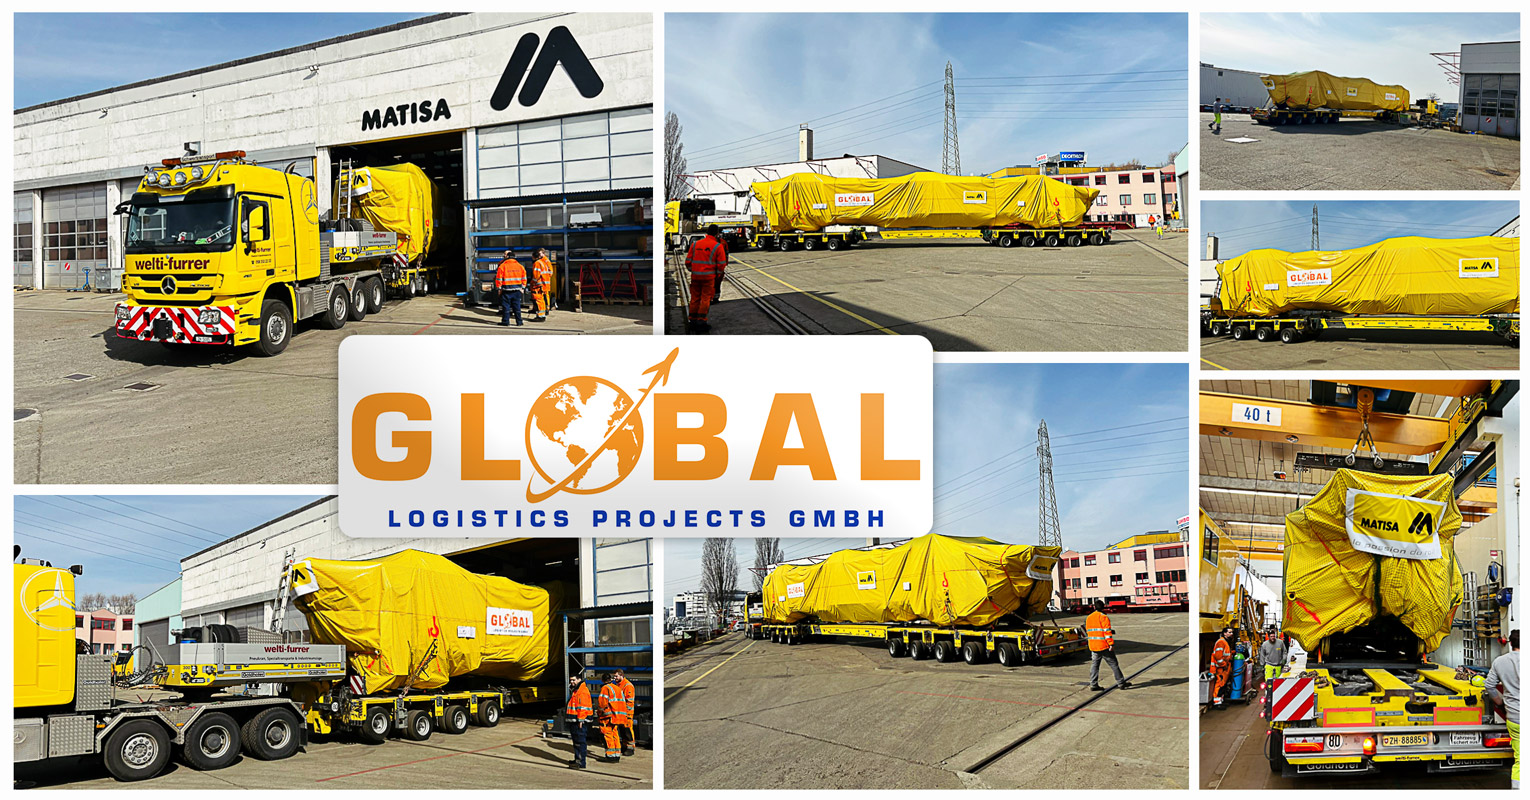 Global Logistics Projects Handled a 4th Energy Wagon with Final Destination Rio De Janeiro